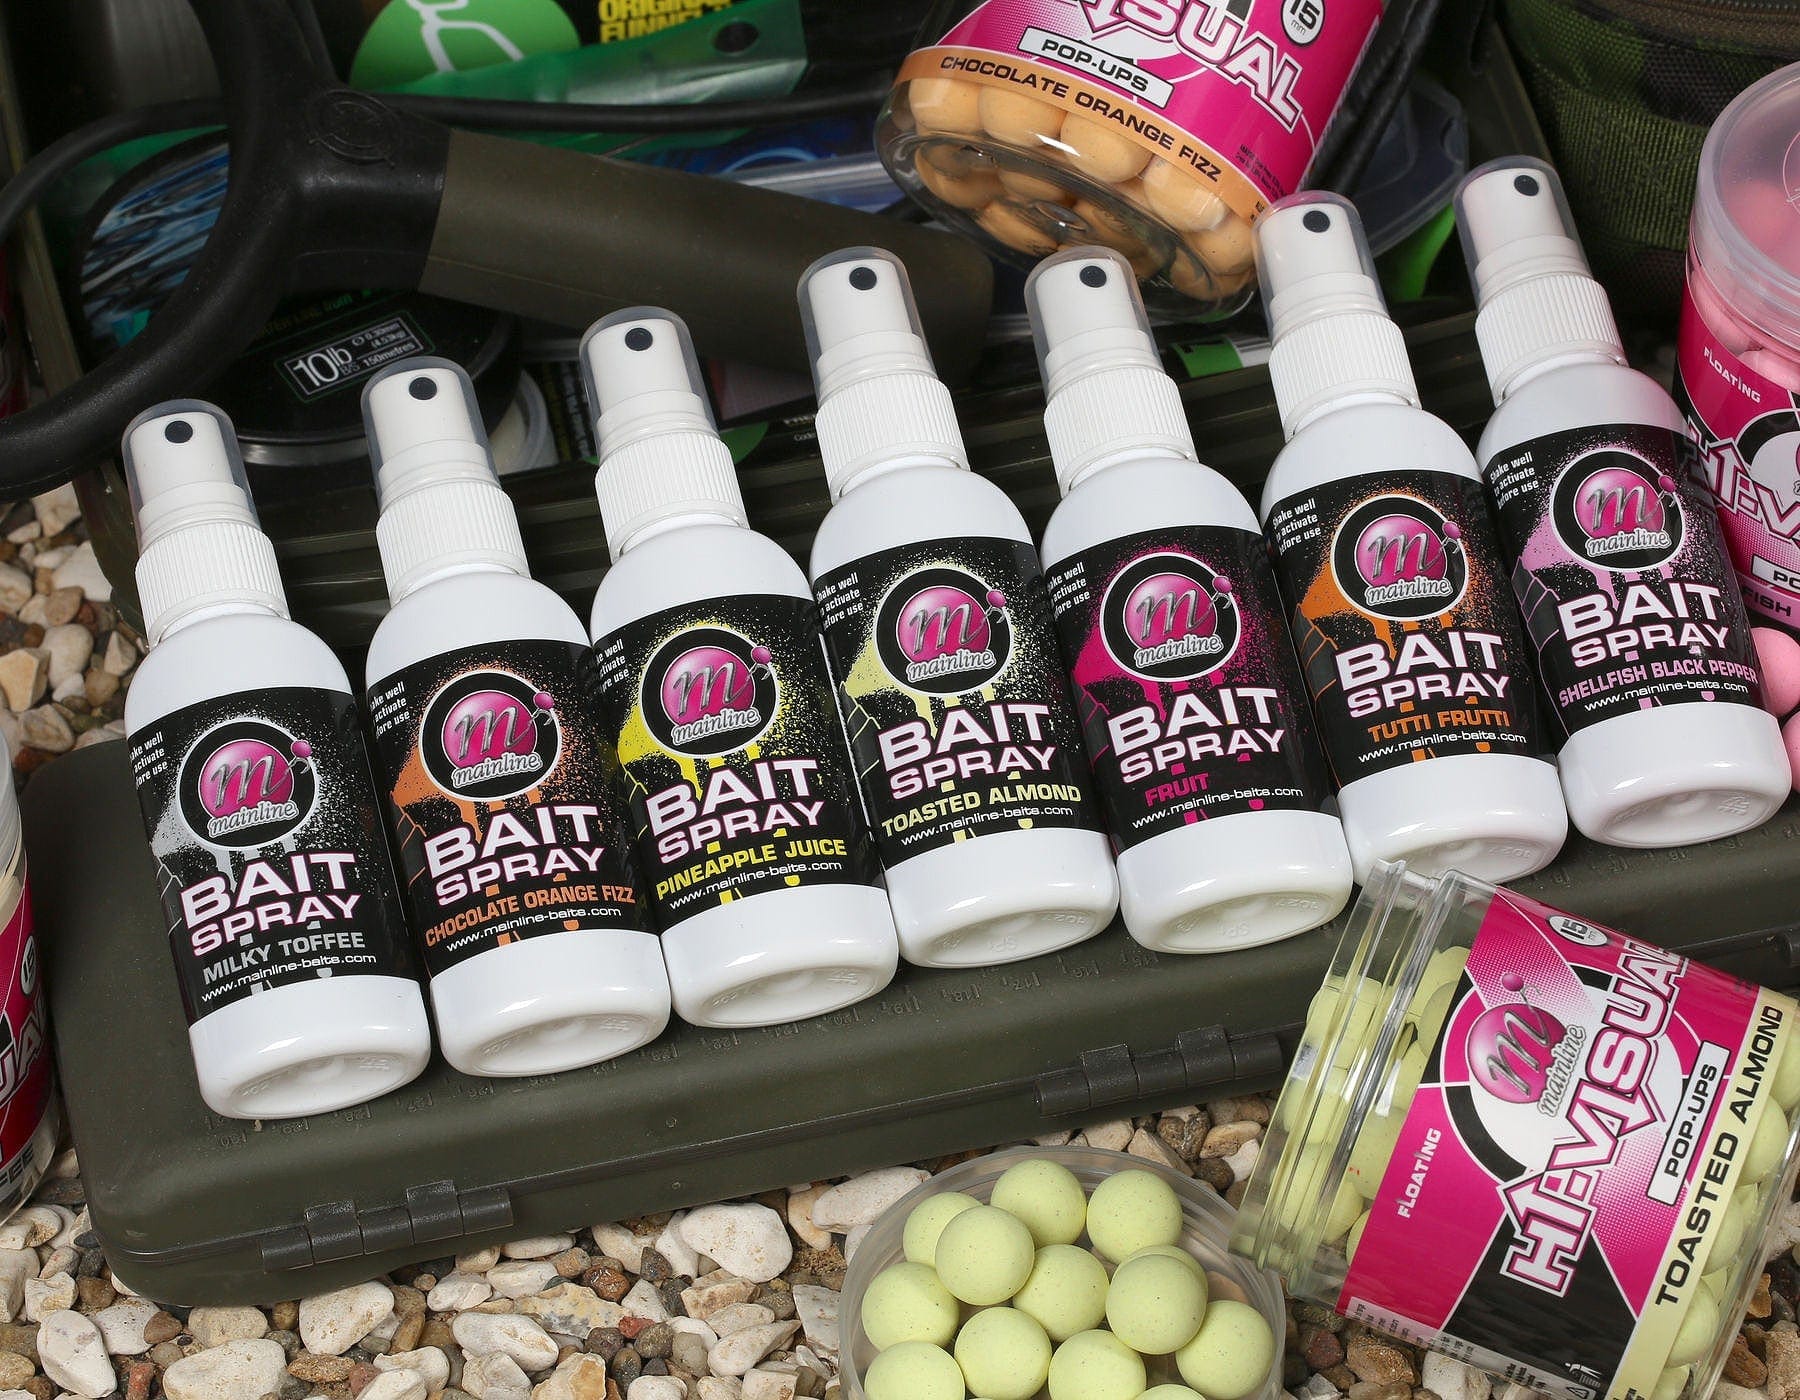 Mainline Bait Sprays - Choices of Flavours.